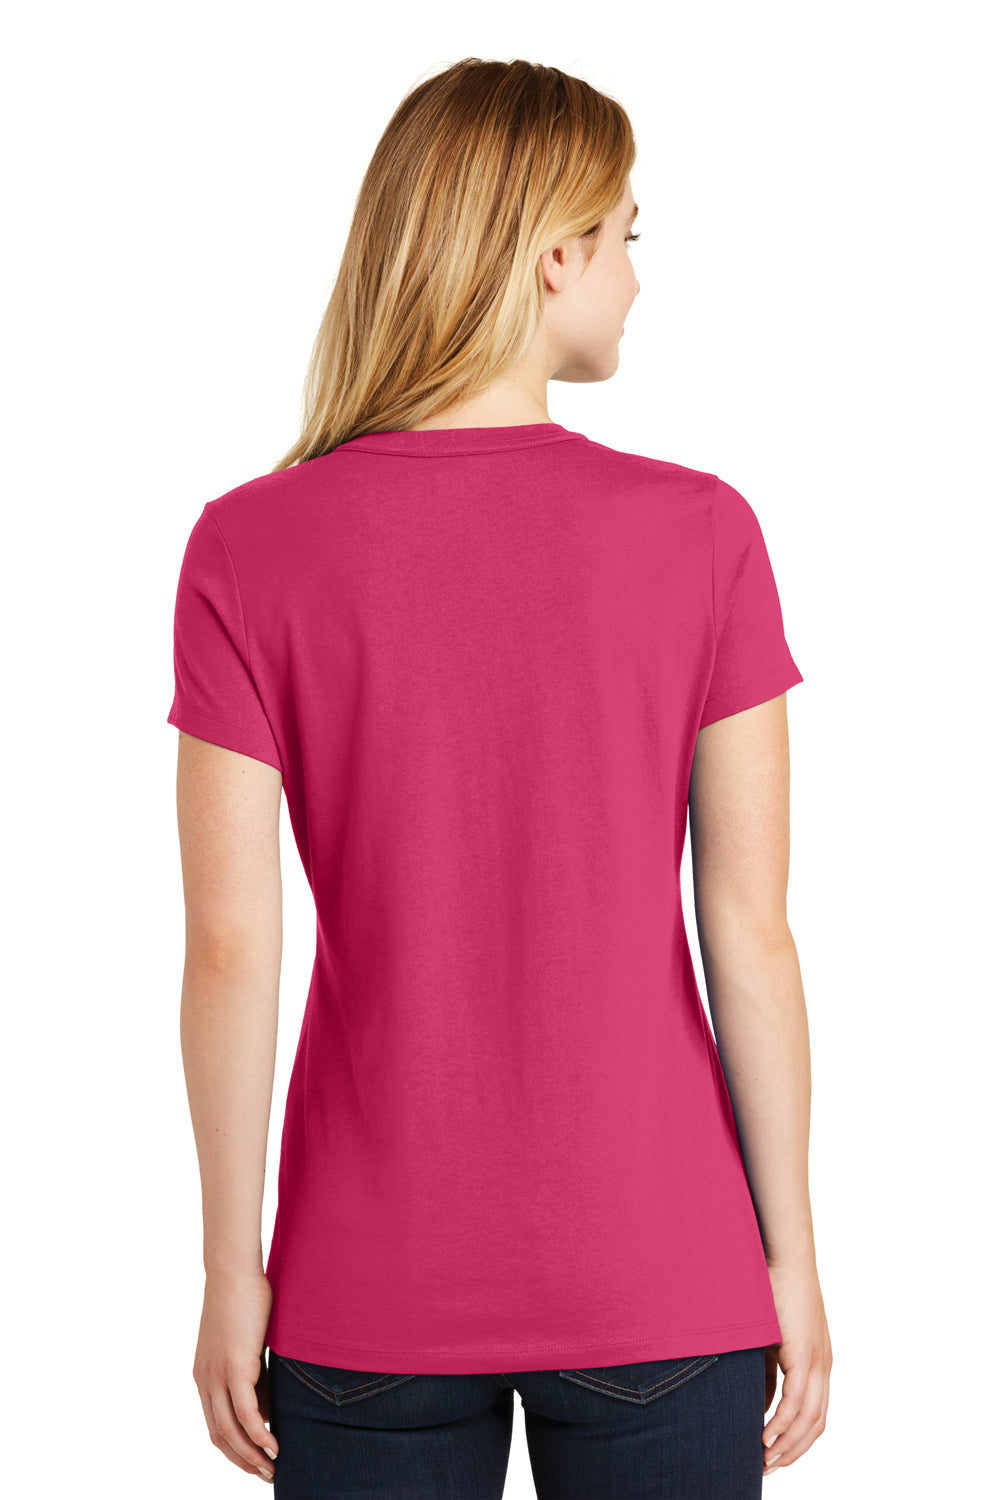 New Era LNEA100 Womens Heritage Short Sleeve Crewneck T-Shirt Deep Pink Back